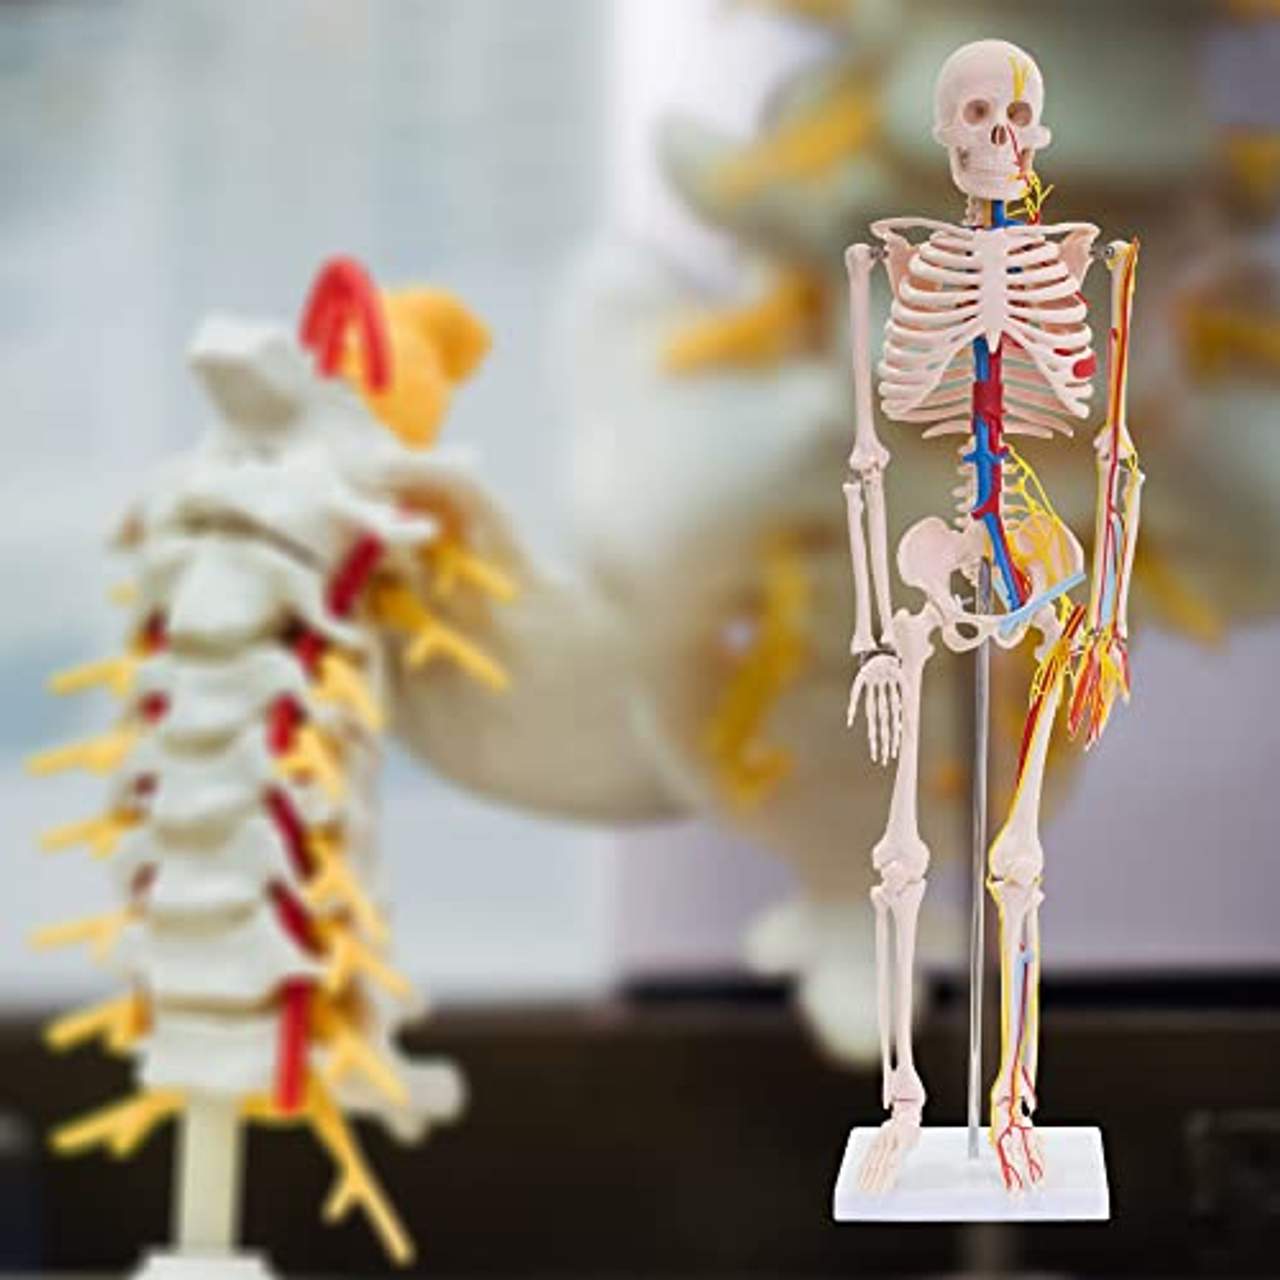 MedMod Anatomie Modell Skelett